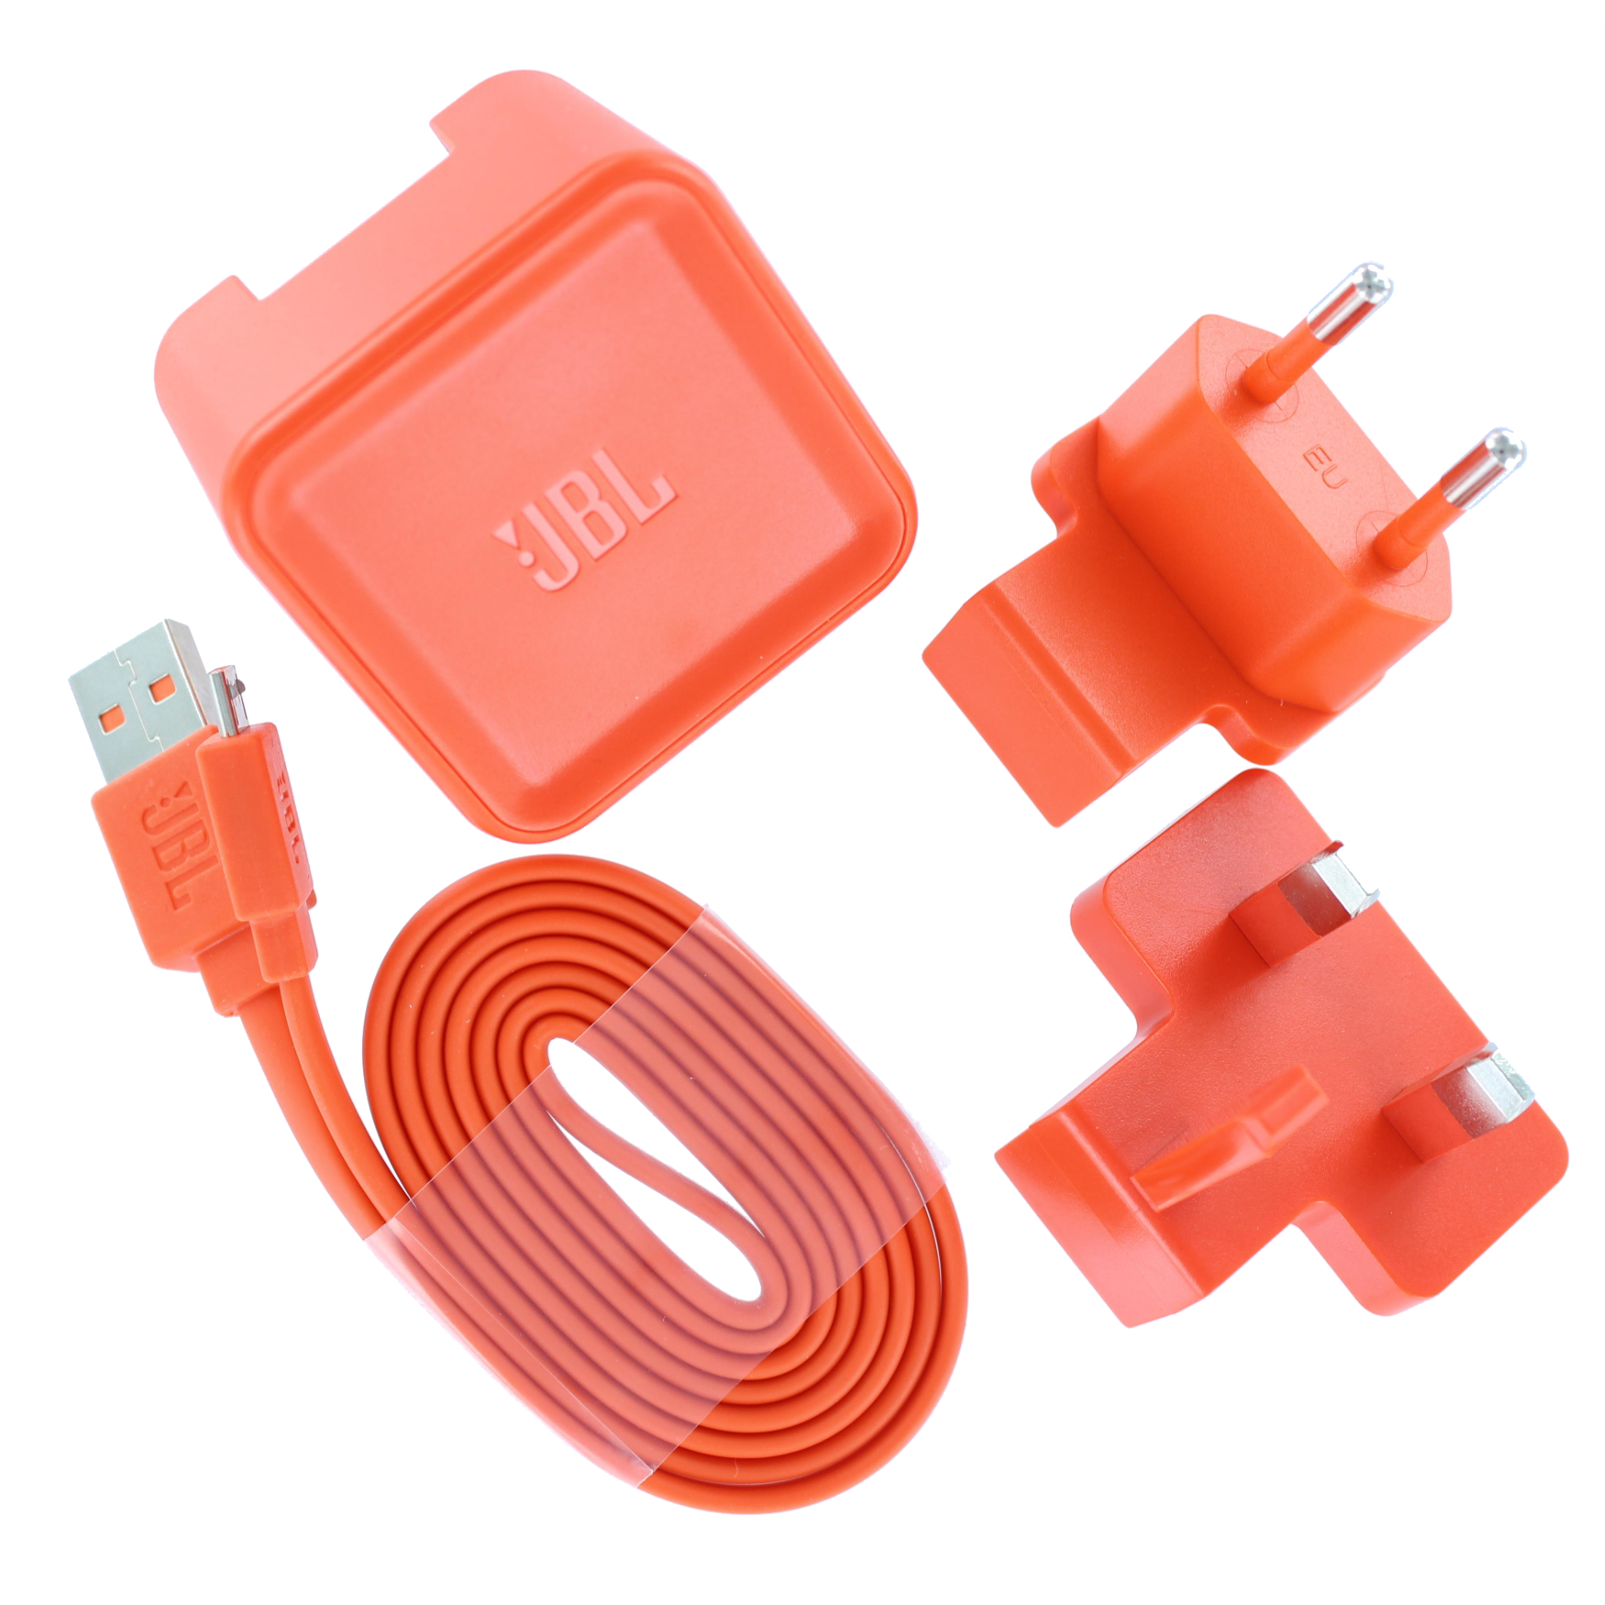 Адаптер для JBL charge 3. Оранжевый зарядный адаптер JBL. USB адаптер JBL. Адаптер для зарядки JBL charge 5. Купить зарядку jbl